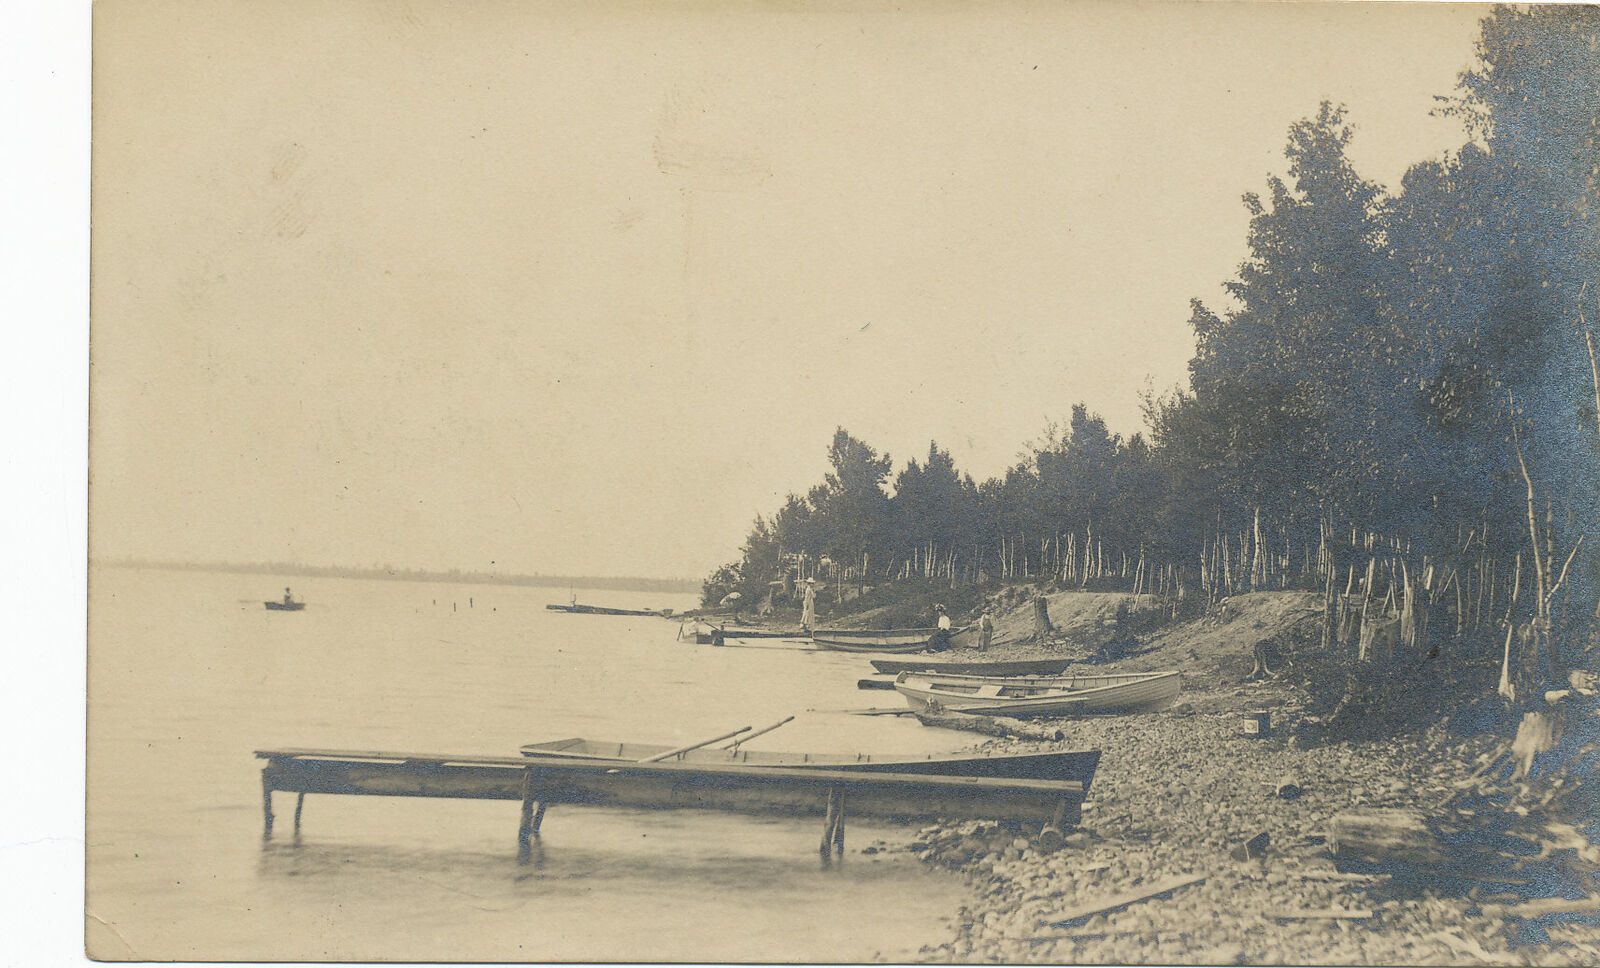 Rowboats along the Wooded Shoreline real photo postcard 1908